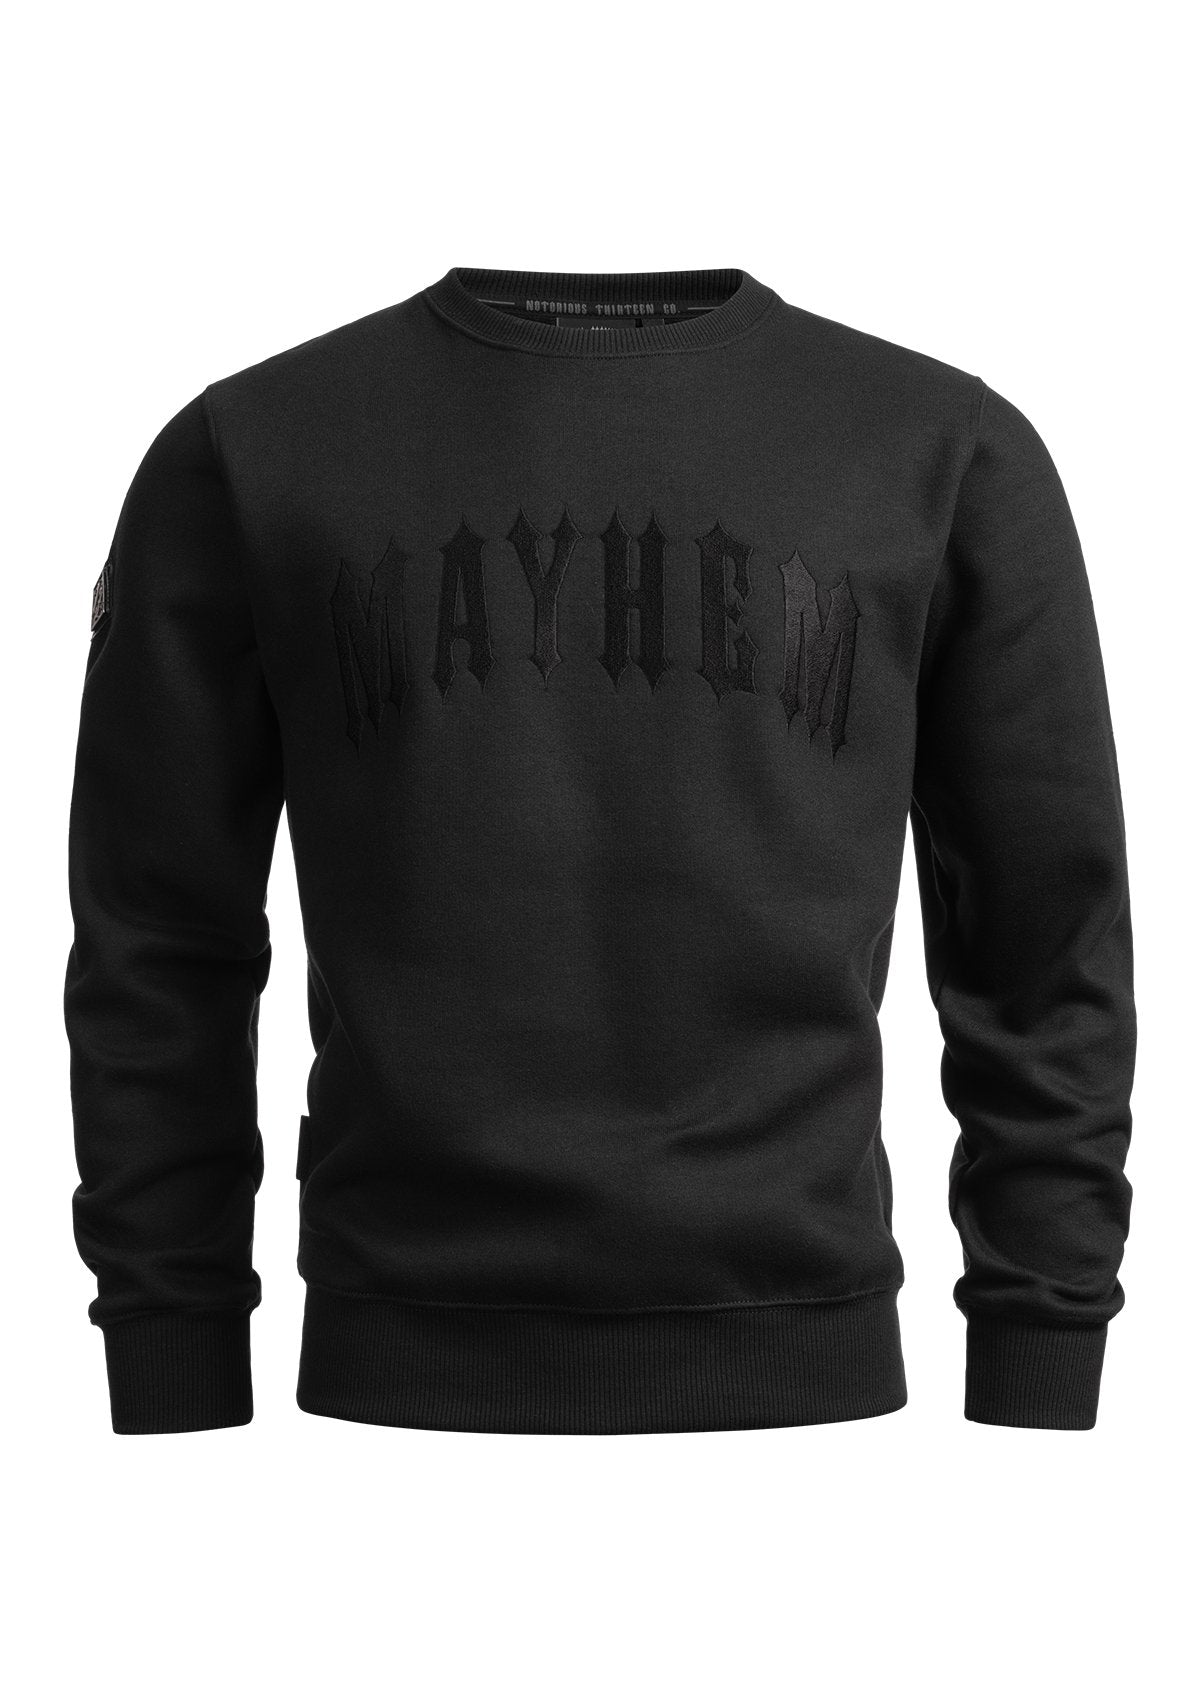 Crewneck Mayhem B/B - MEN OF MAYHEM - ALAIKO-EXCHANGES-MM-M-1040-CM-BB - allblack - black